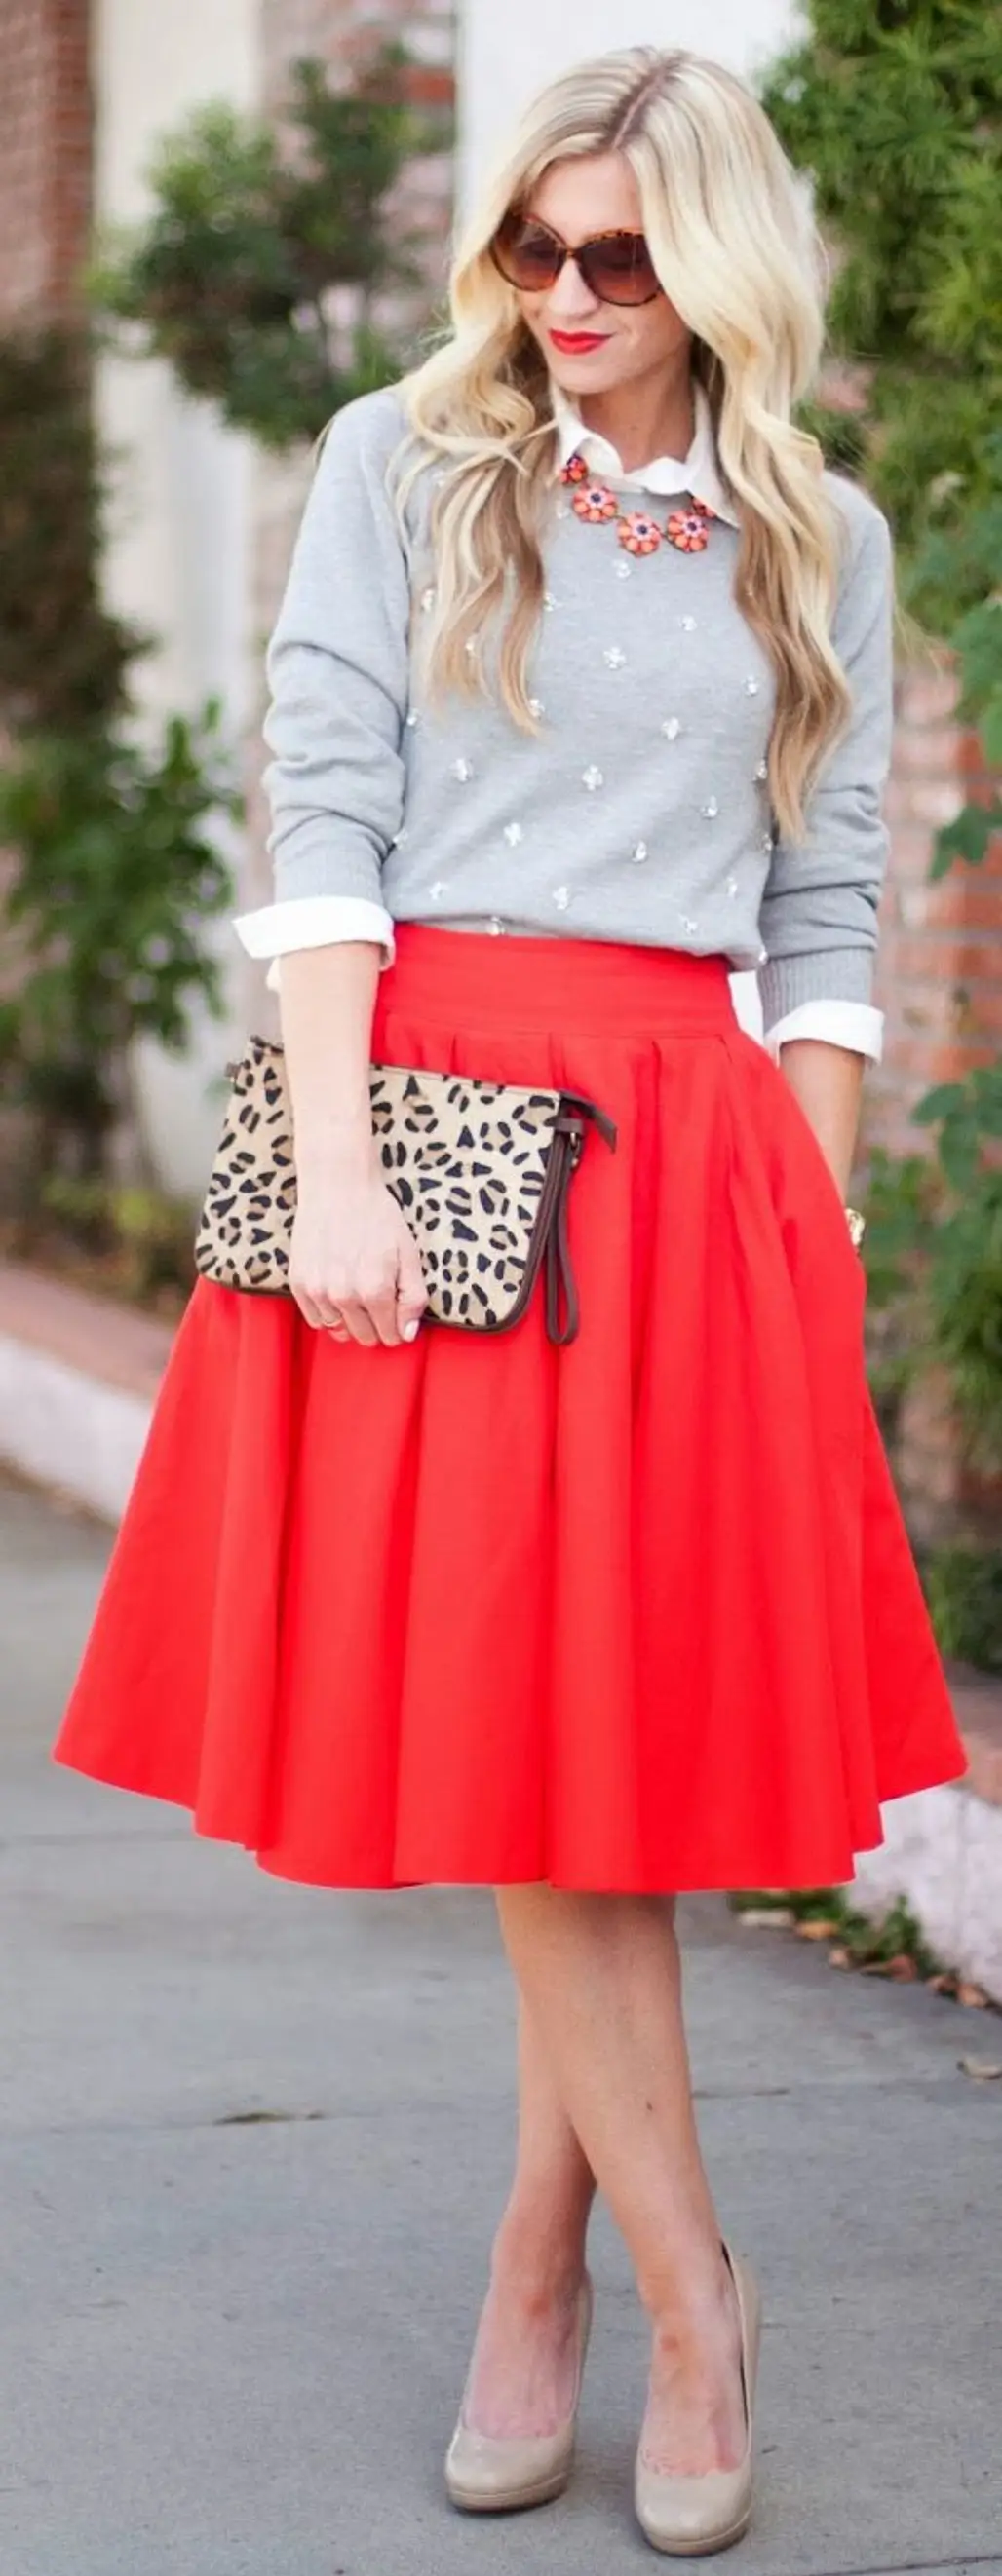 red,clothing,pink,dress,pattern,